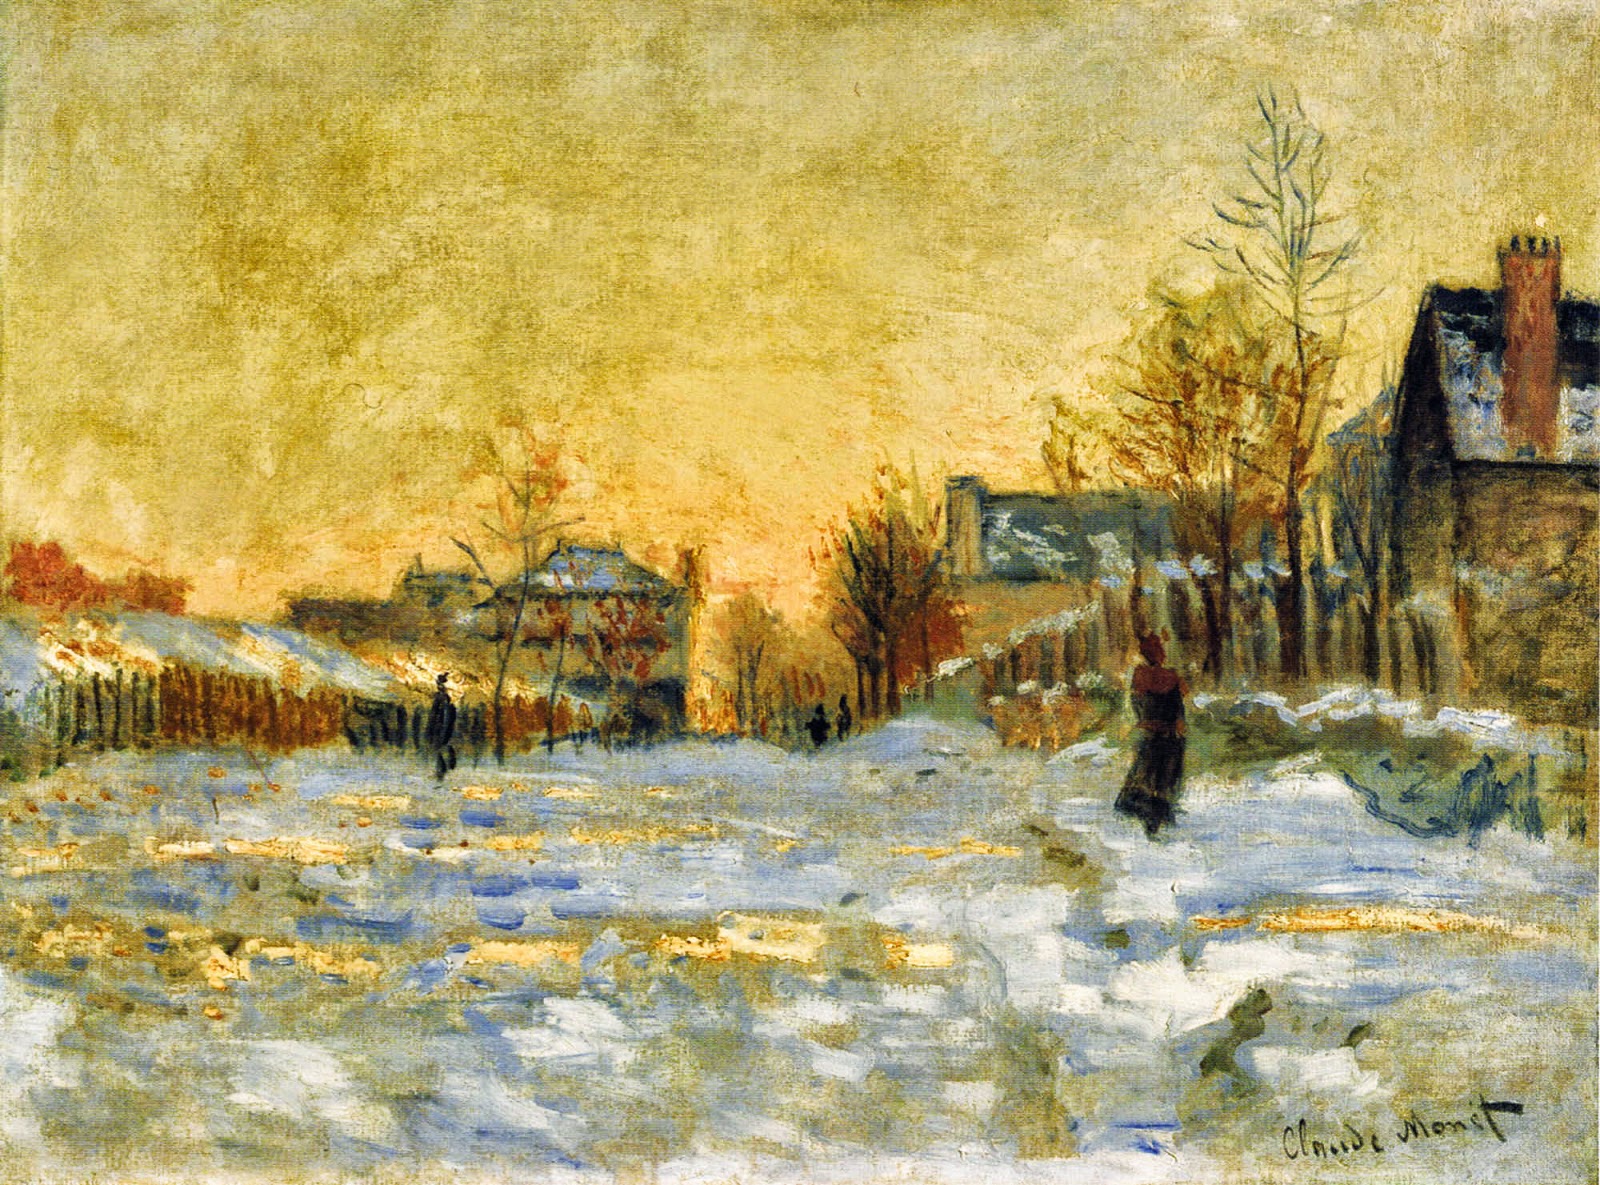 Claude+Monet-1840-1926 (61).jpg